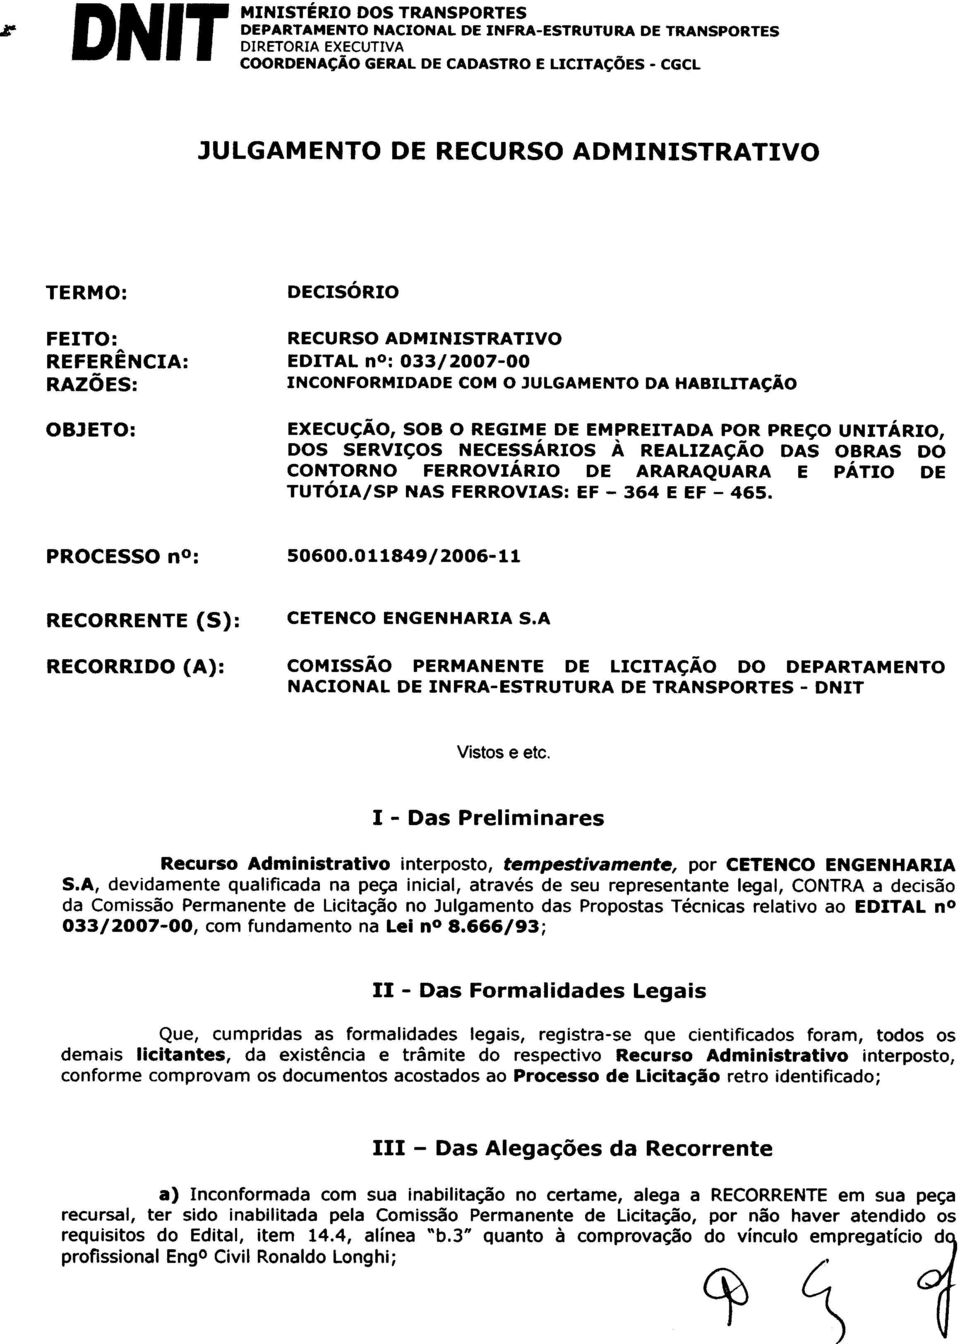 FERROVIARIO DE ARARAQUARA E patio DE TUTOIA/SP NAS FERROVIAS: EF - 364 E EF - 465. PROCESSO no: 50600.011849/2006-11 RECORRENTE (5): RECORRIDO (A): CETENCO ENGEN HARIA S.